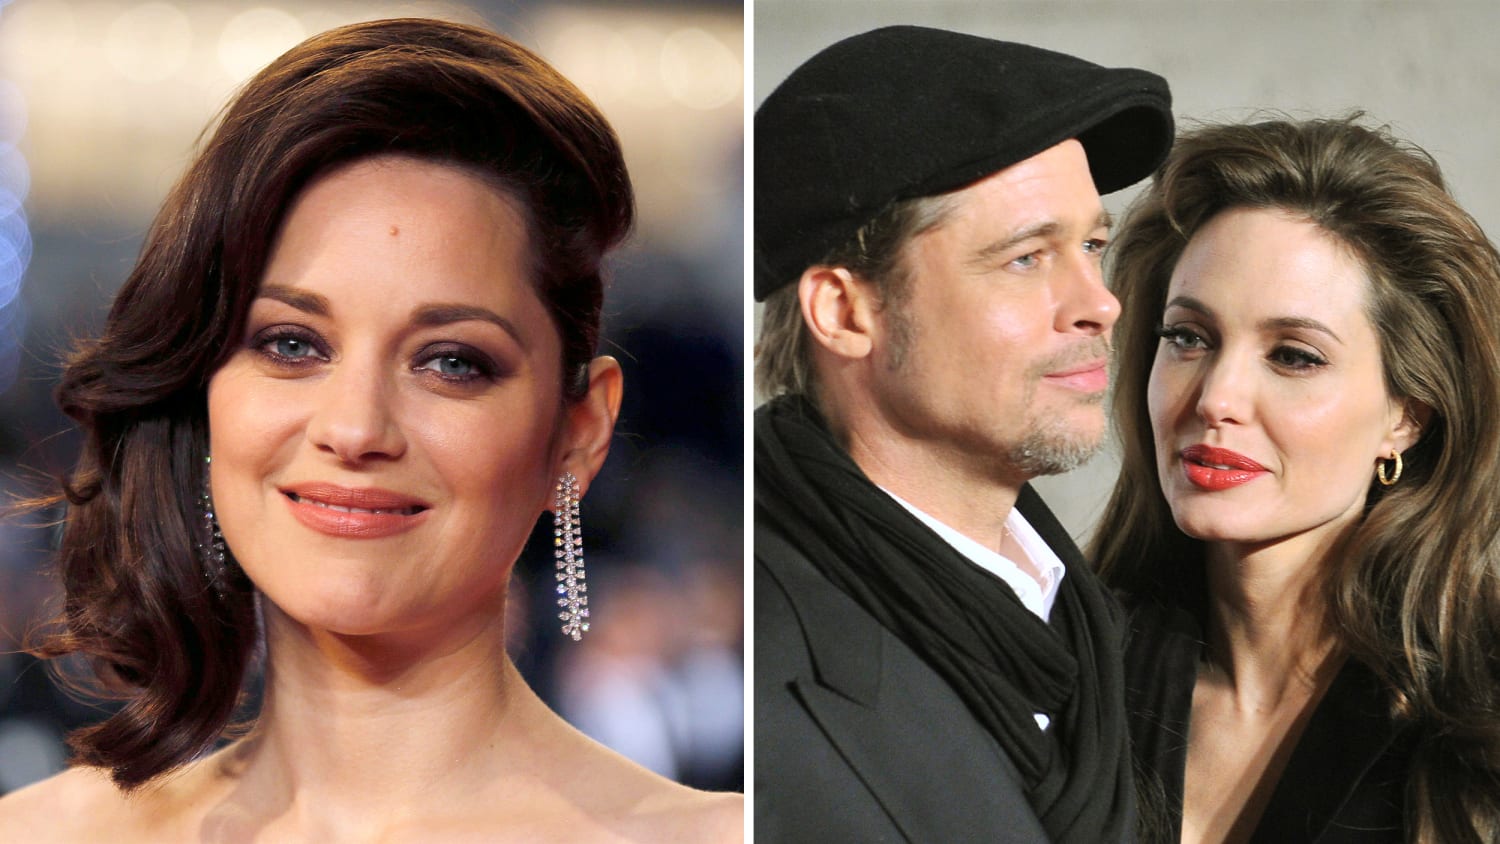 Marion Cotillard addresses Brad Pitt affair rumors, wishes Pitt, Angelina Jolie 'peace ...2500 x 1407